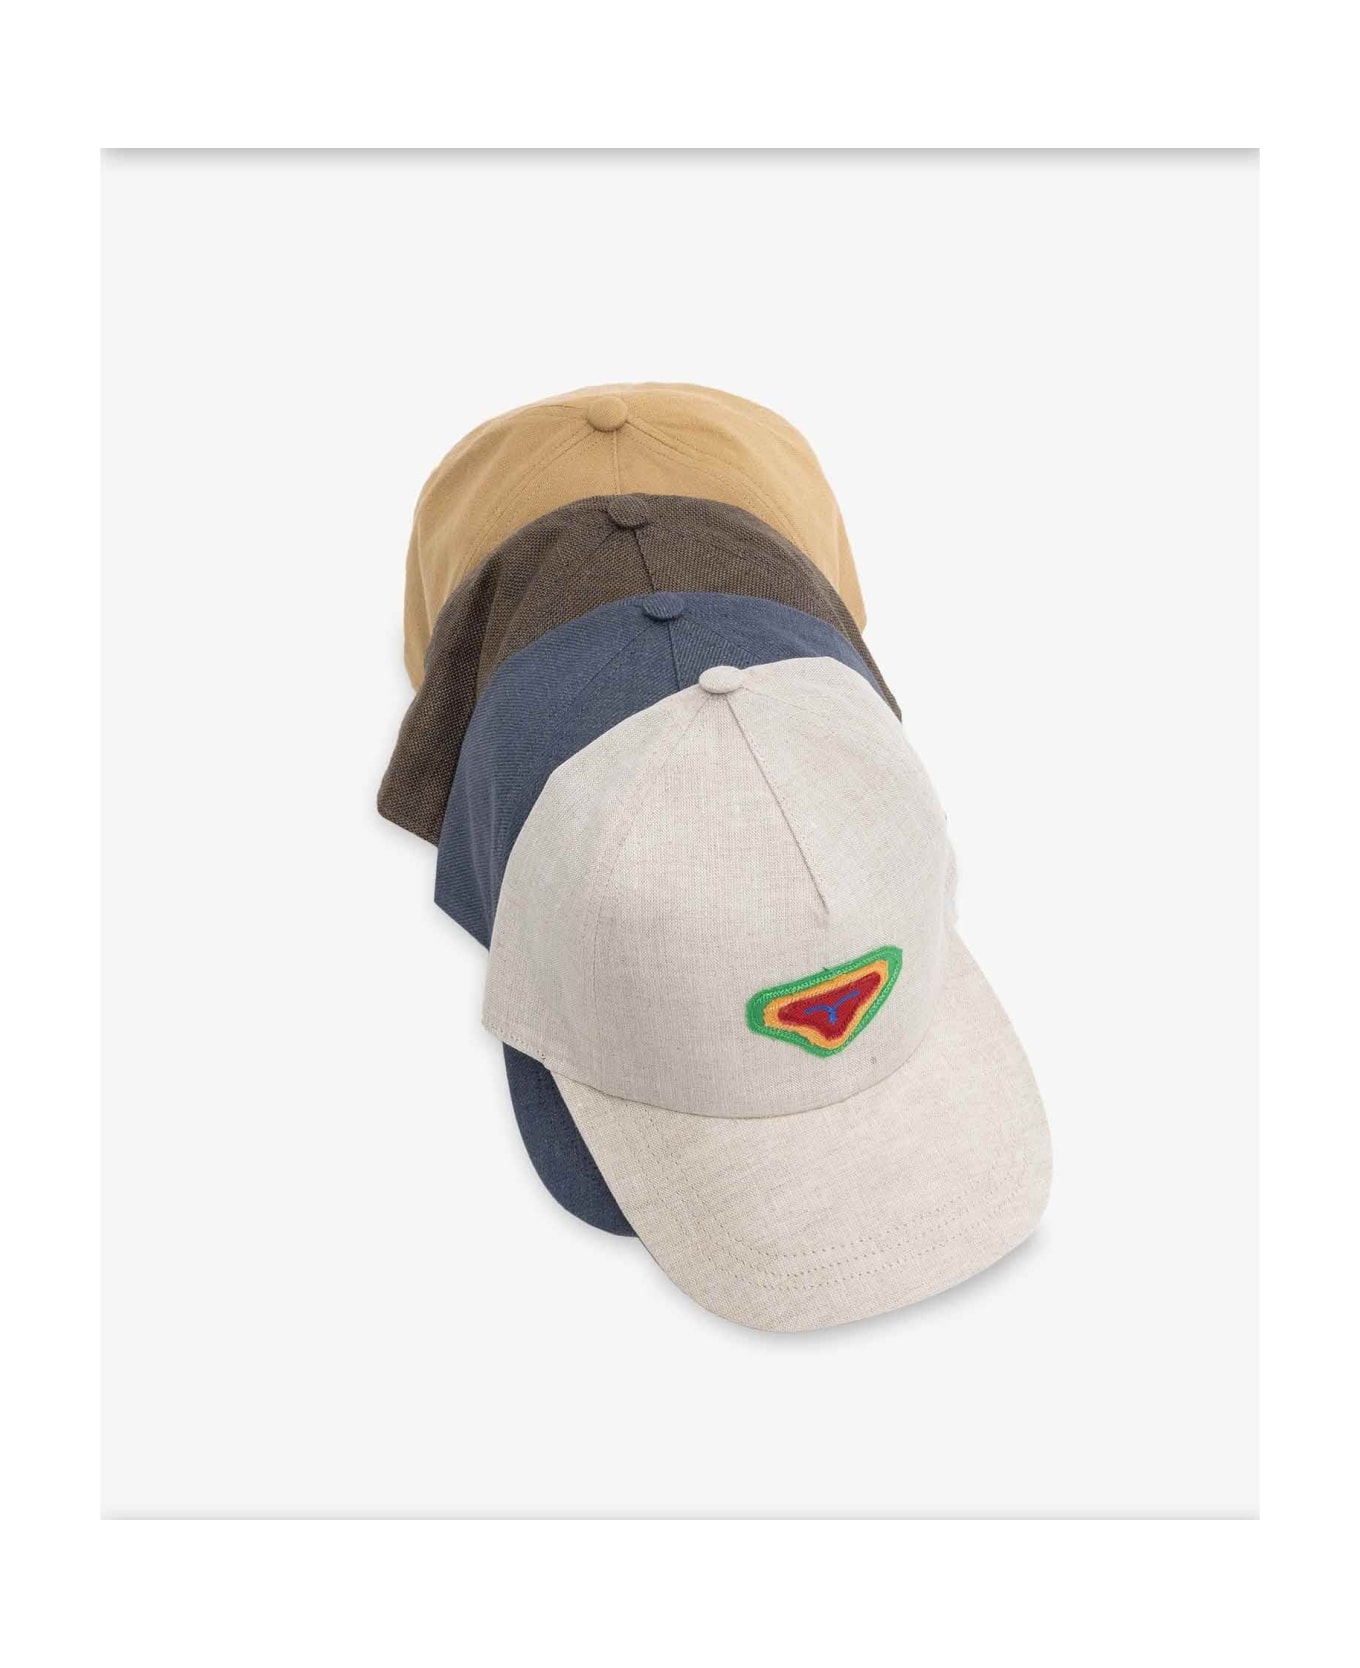 Larusmiani Baseball Cap Hat - Olive